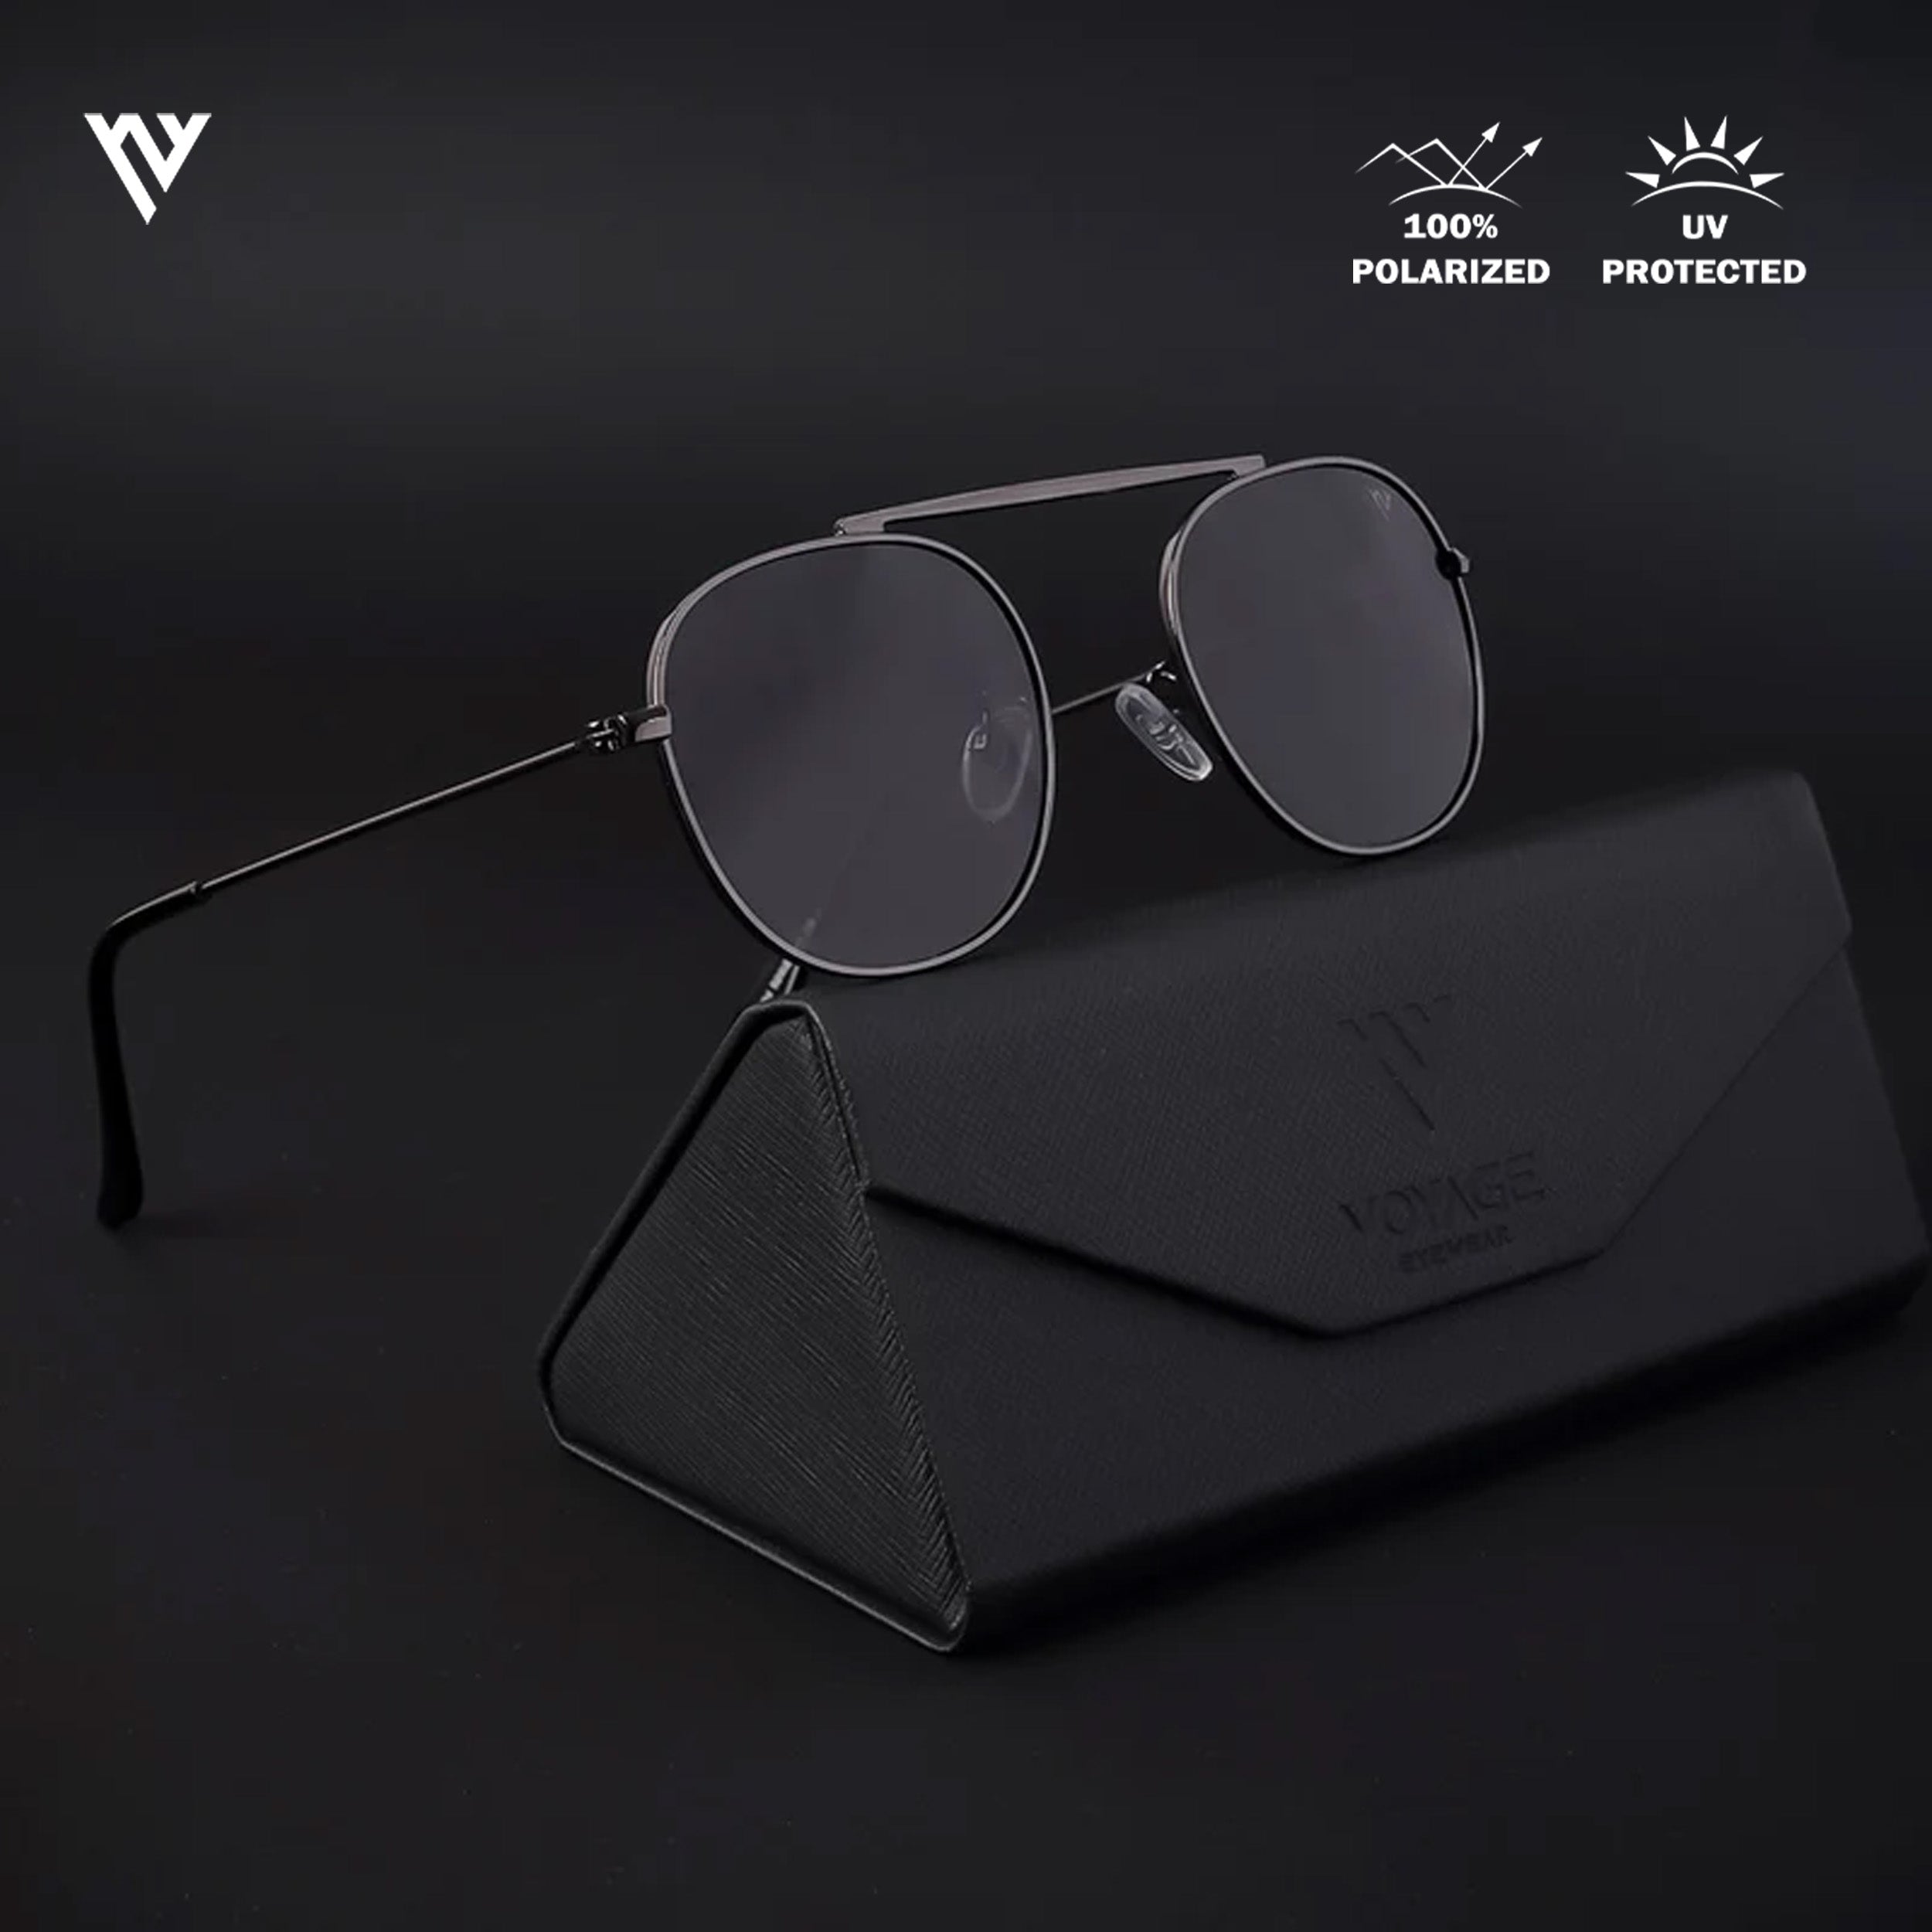 Voyage Exclusive Grey Polarized Round Sunglasses for Men & Women - PMG4139